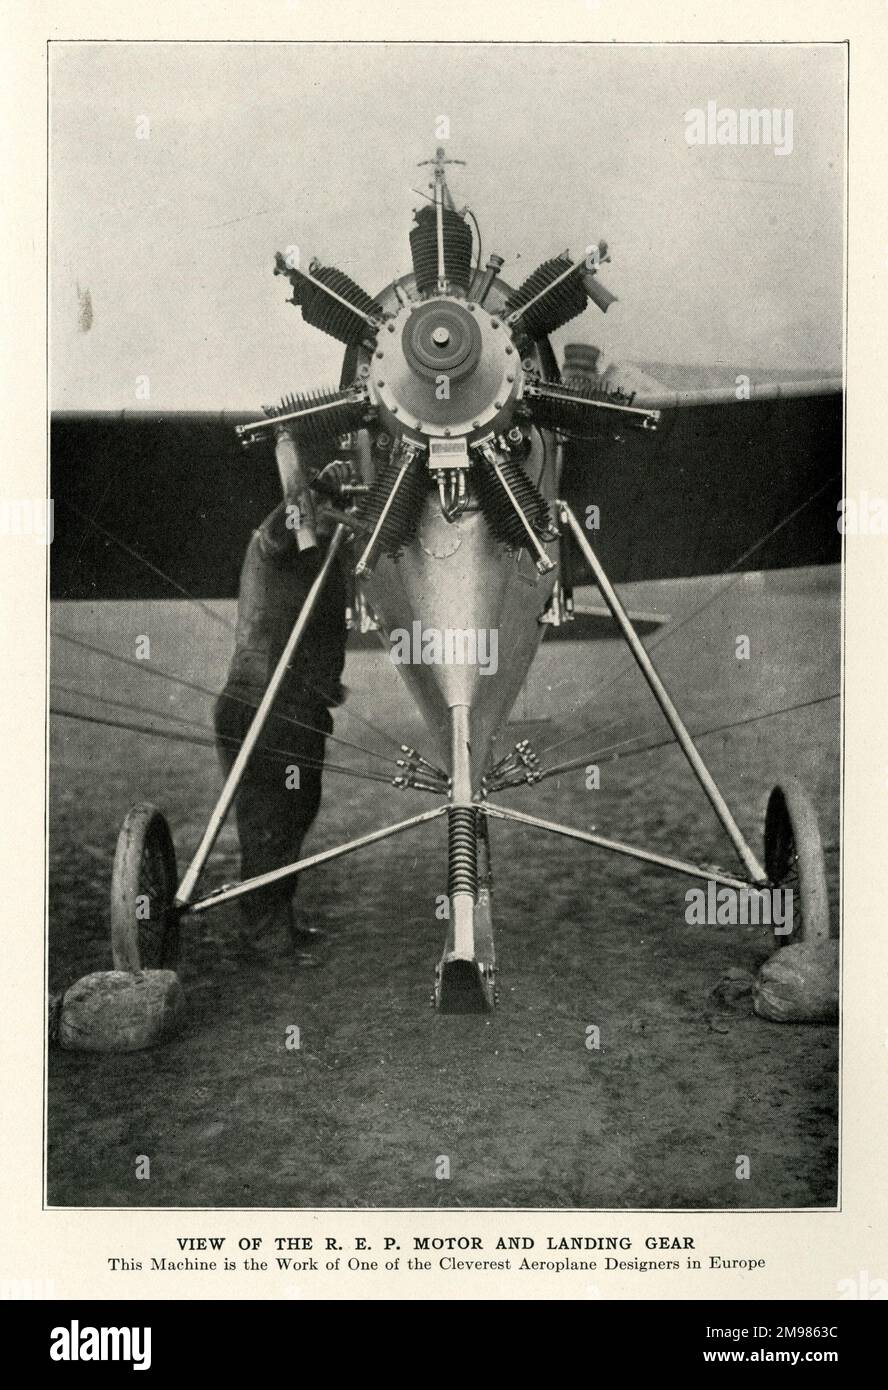 R.E.P. motor and landing gear, the work of a European aeroplane designer. Stock Photo